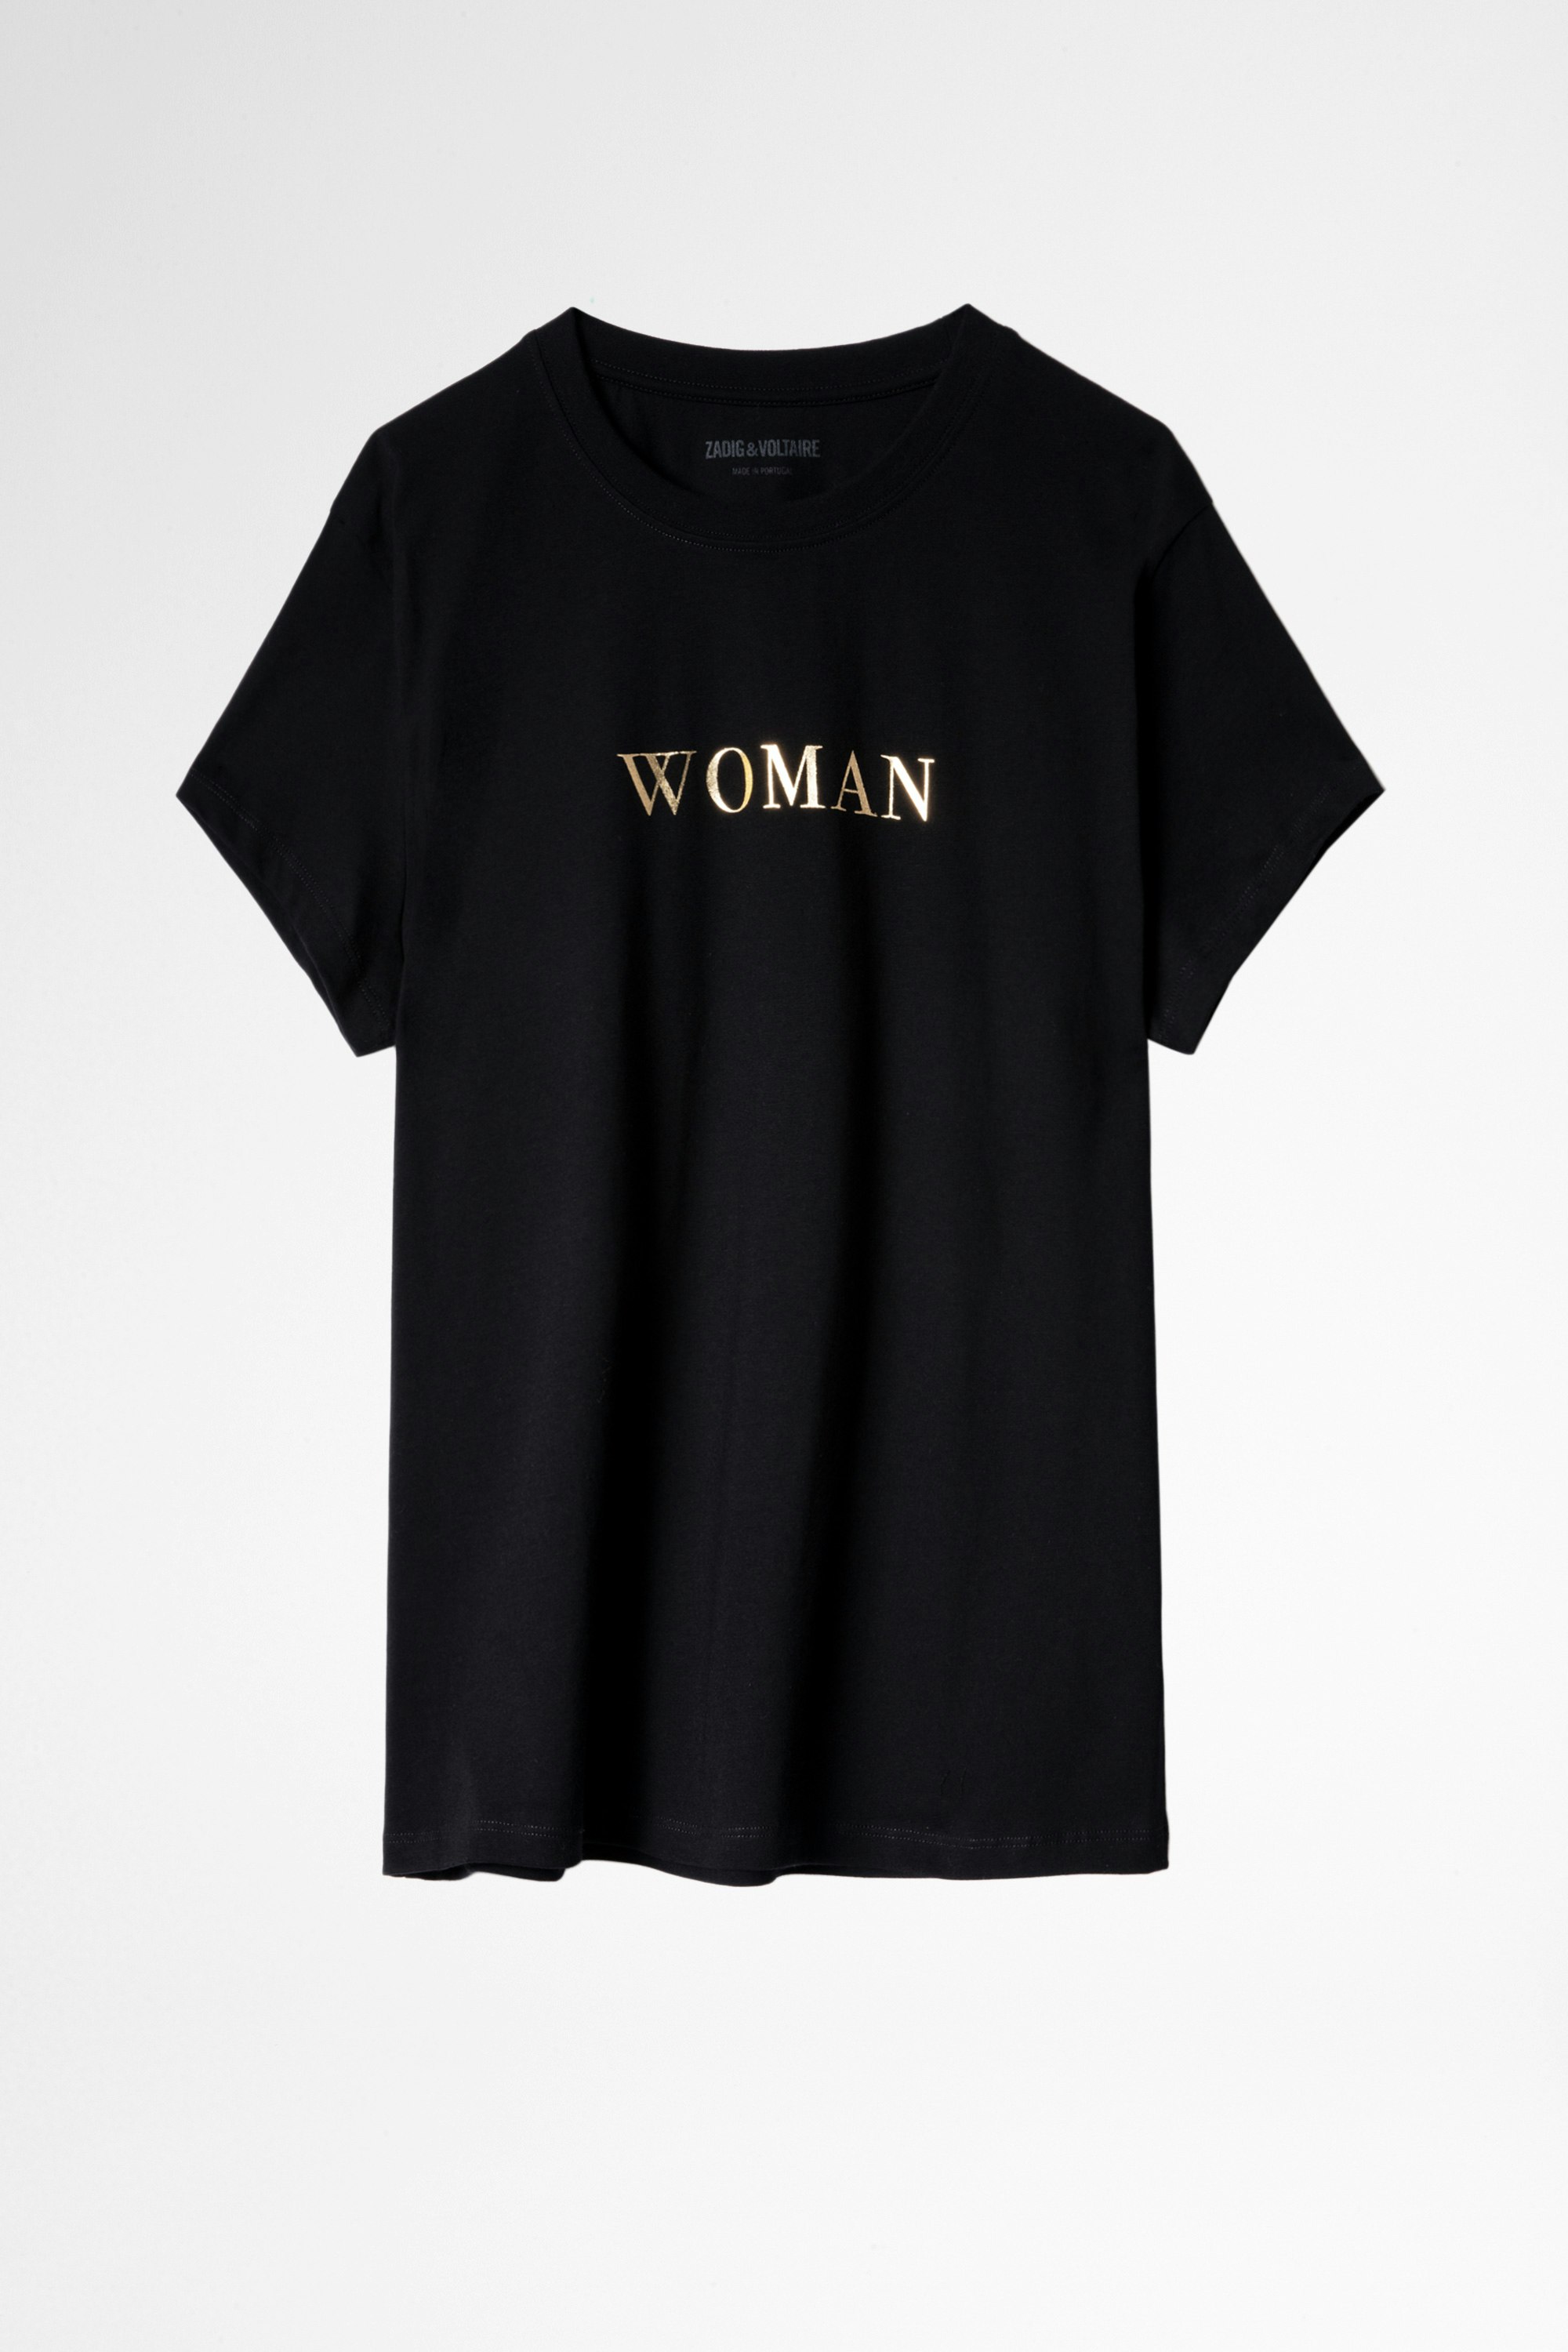 T-Shirt Zoe Schwarzes Damen-T-Shirt aus Baumwolle mit goldfarbenem „Woman“-Schriftzug